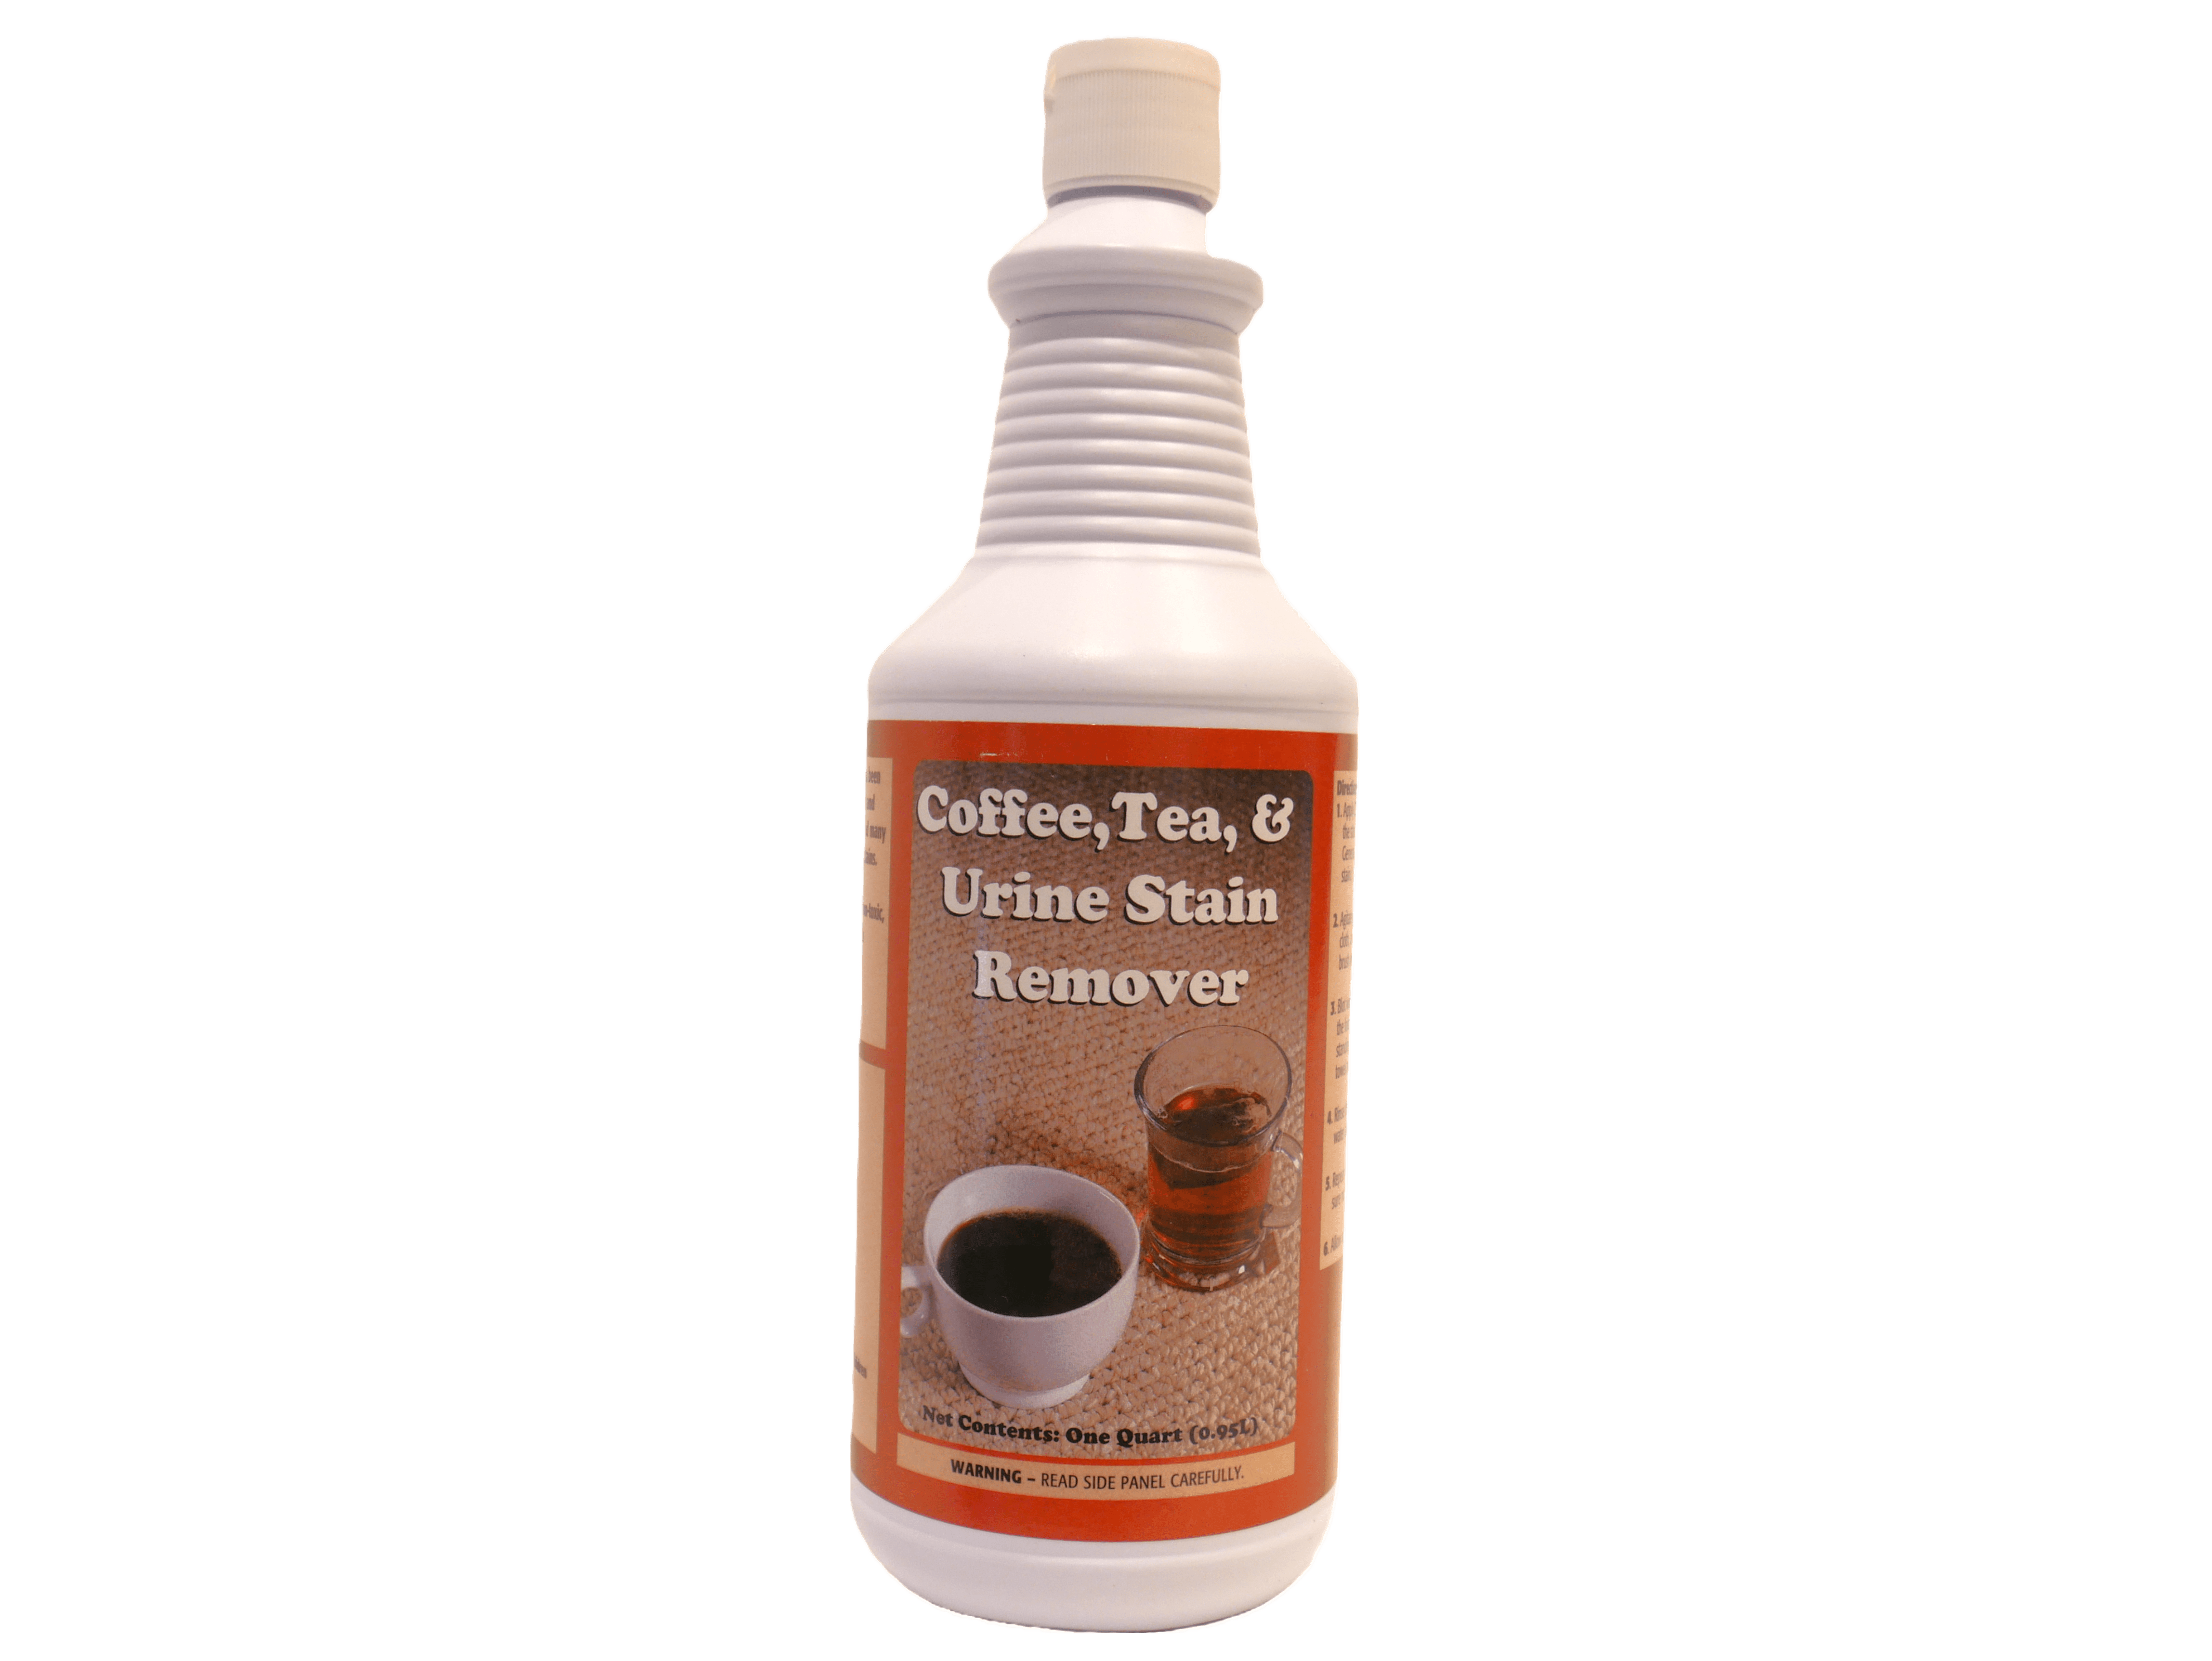 Coffee, Tea, & Urine Stain Remover